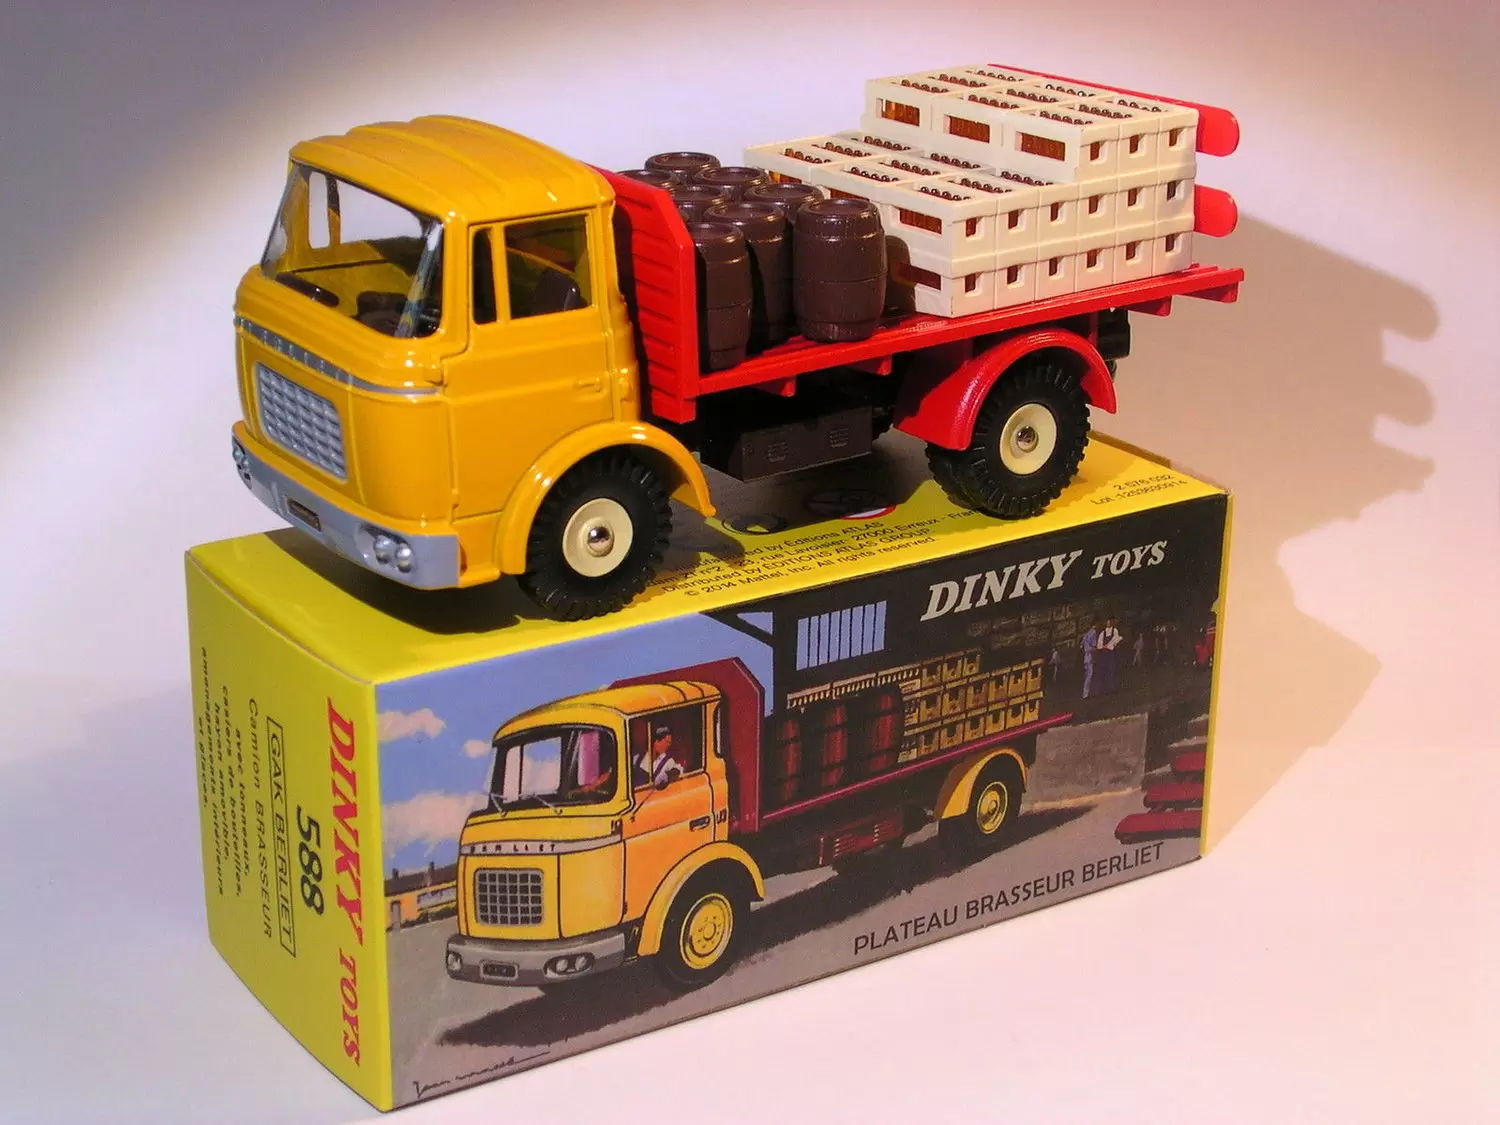 Atlas - Classic Dinky Toys Collection - GAK BERLIET Camion Brasseur (Jaune - Rouge)